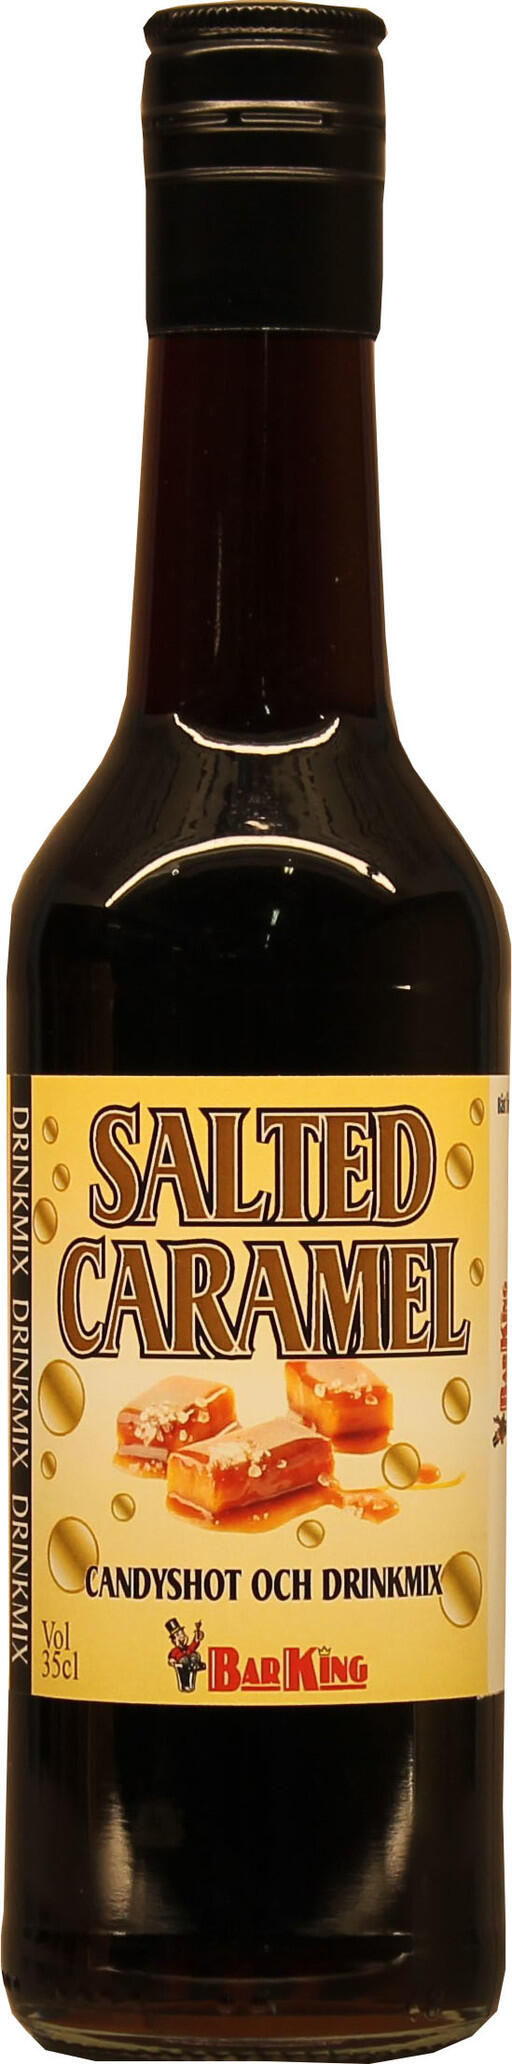 Salted Caramel 35cl